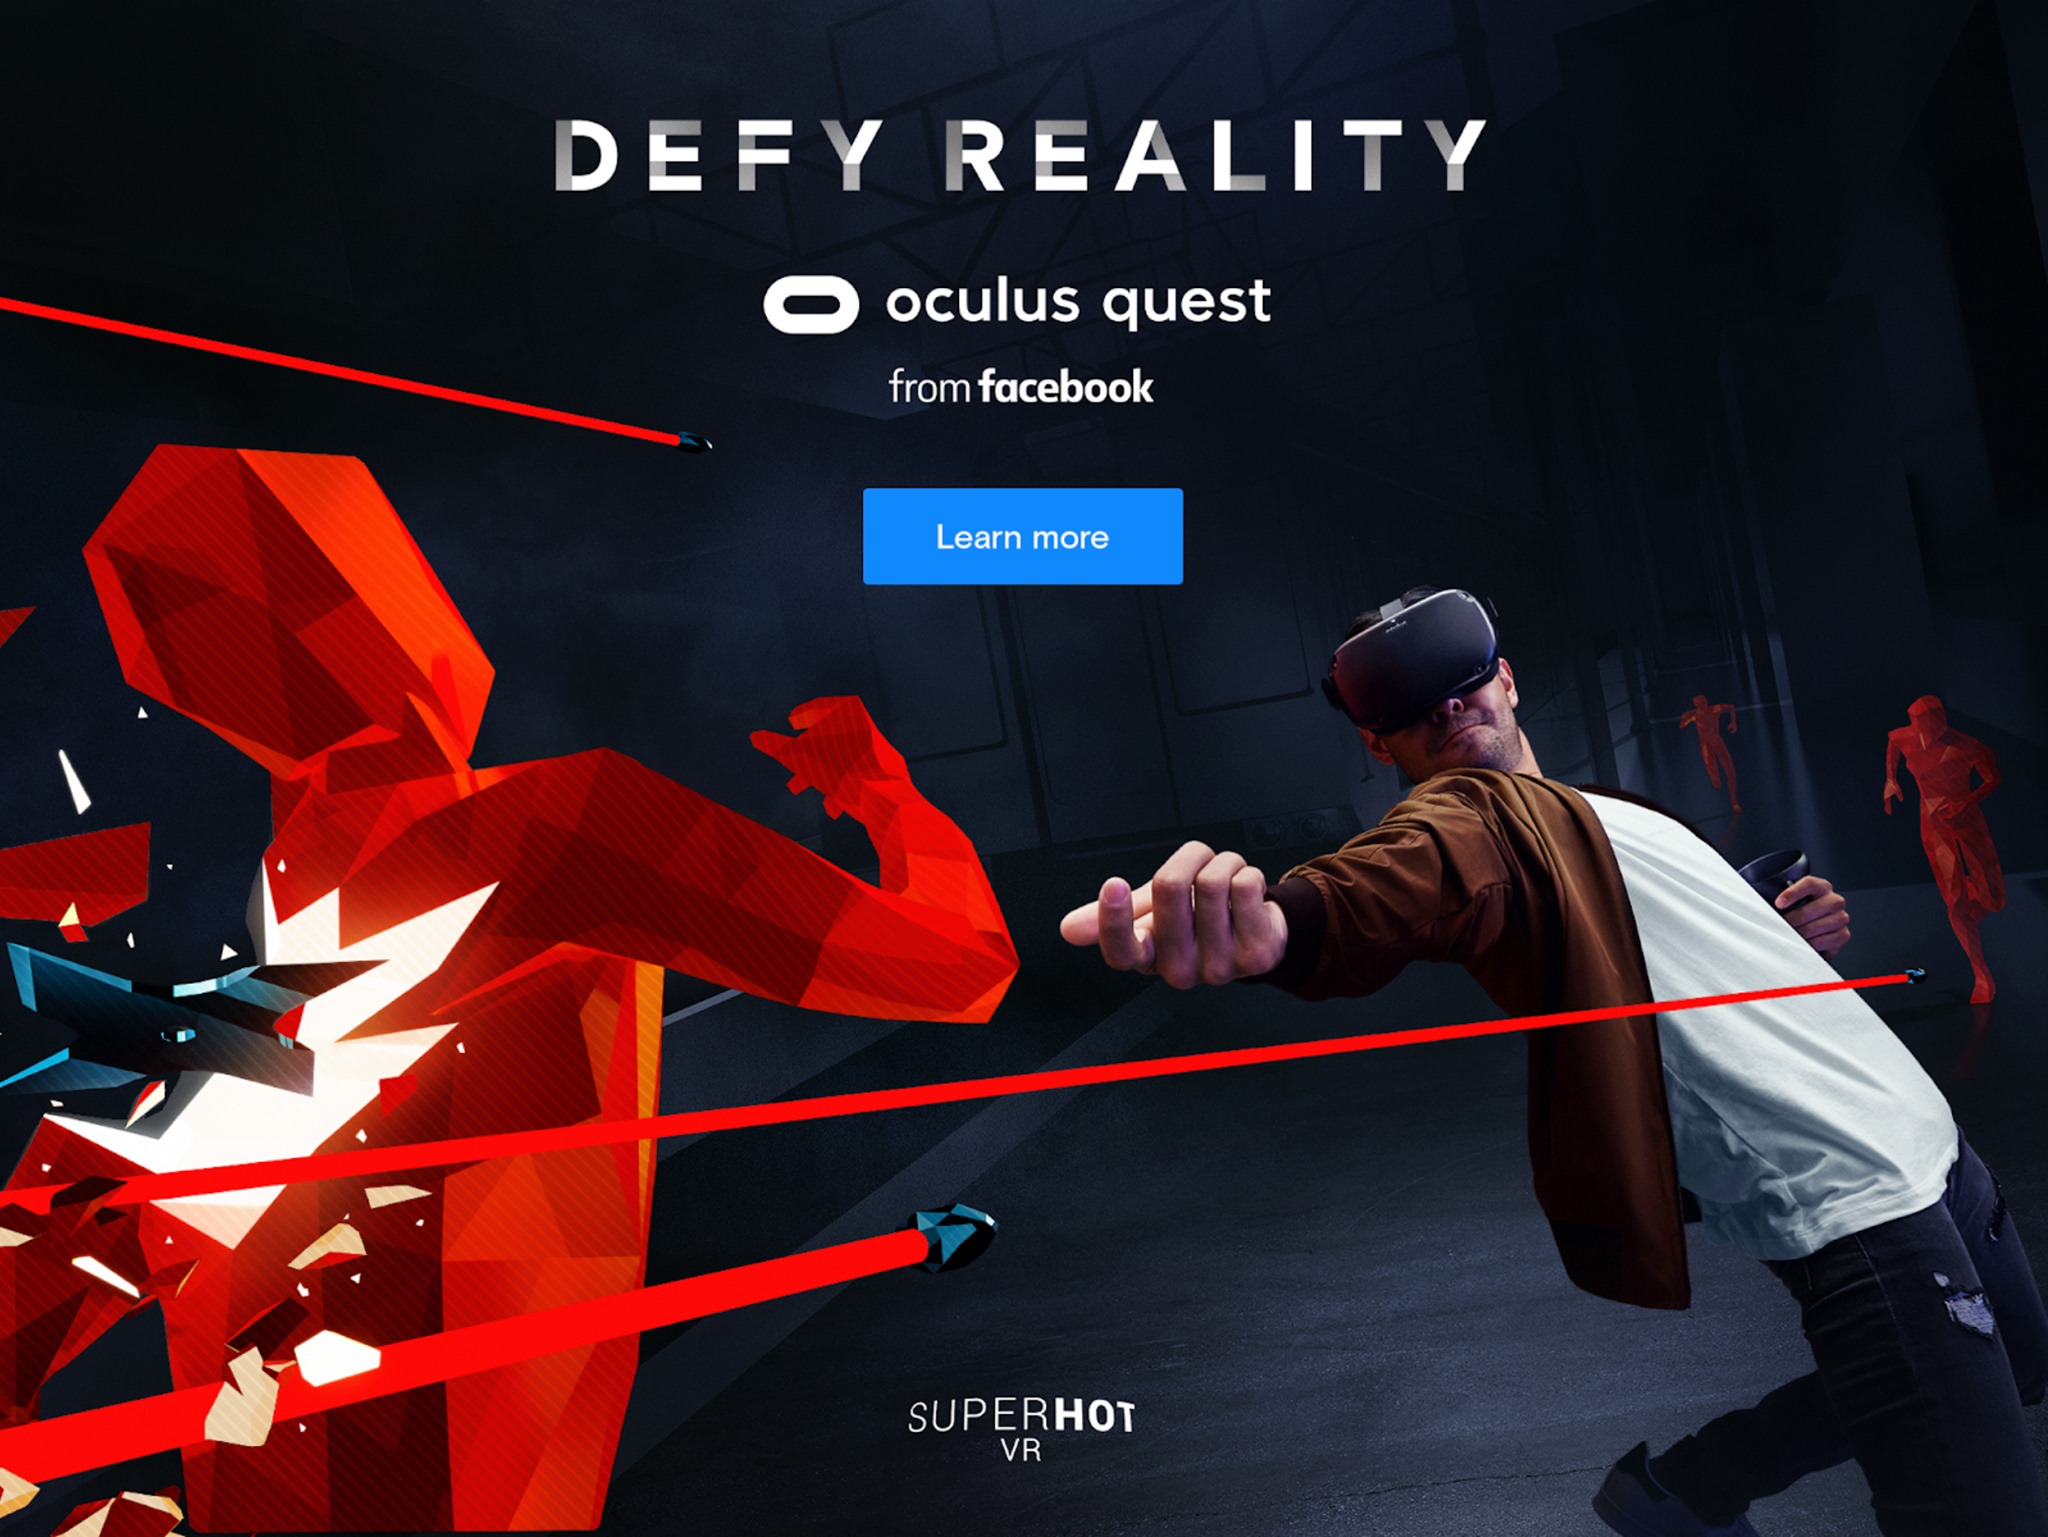 Oculus Quest and Superhot